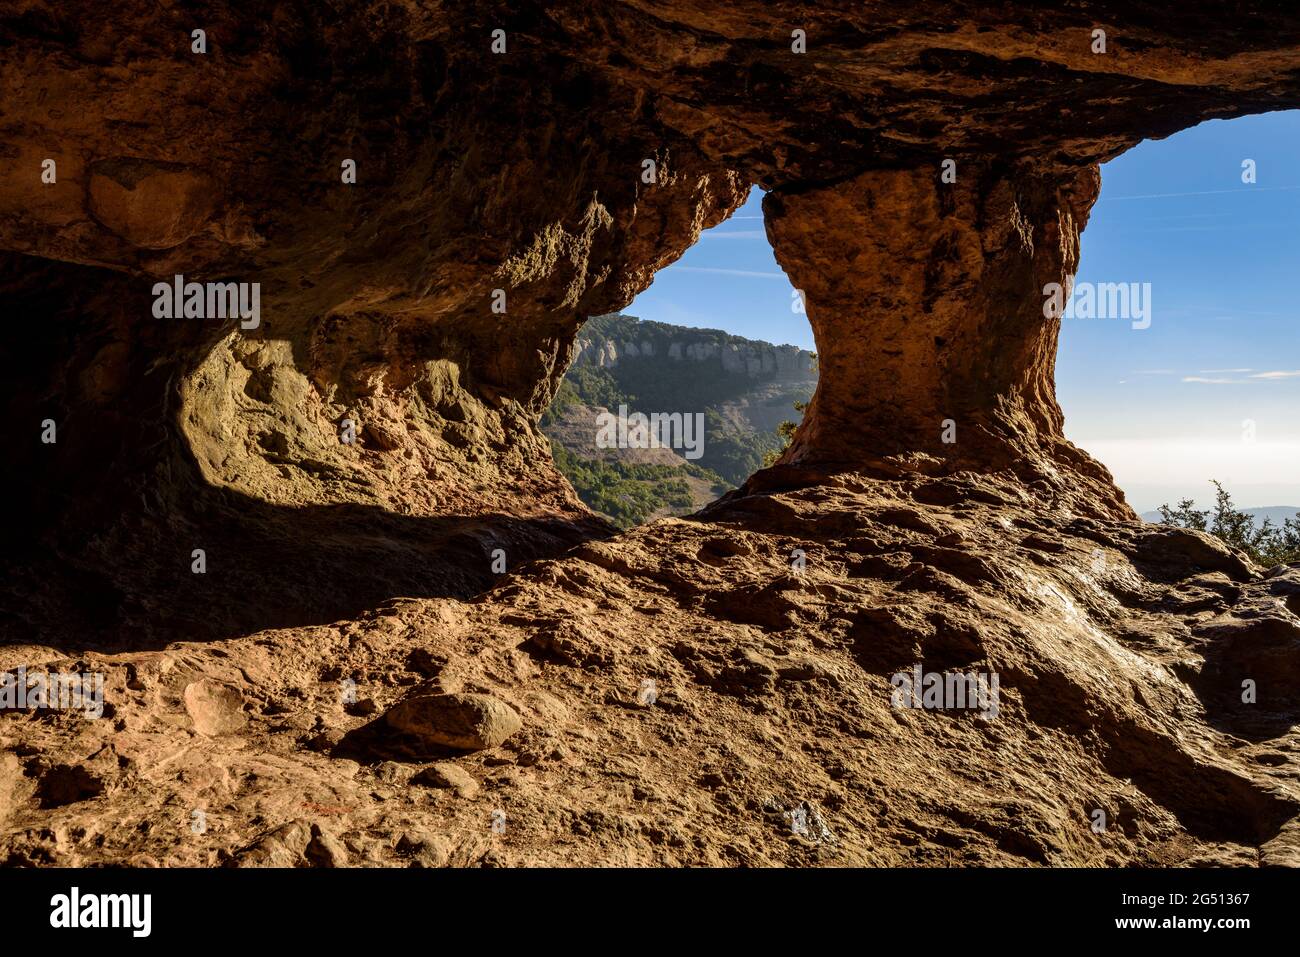 Inside the Ses Corts cave, in the Sant Llorenç del Munt i l'Obac Natural Park (Vallès Occidental, Barcelona, Catalonia, Spain) Stock Photo